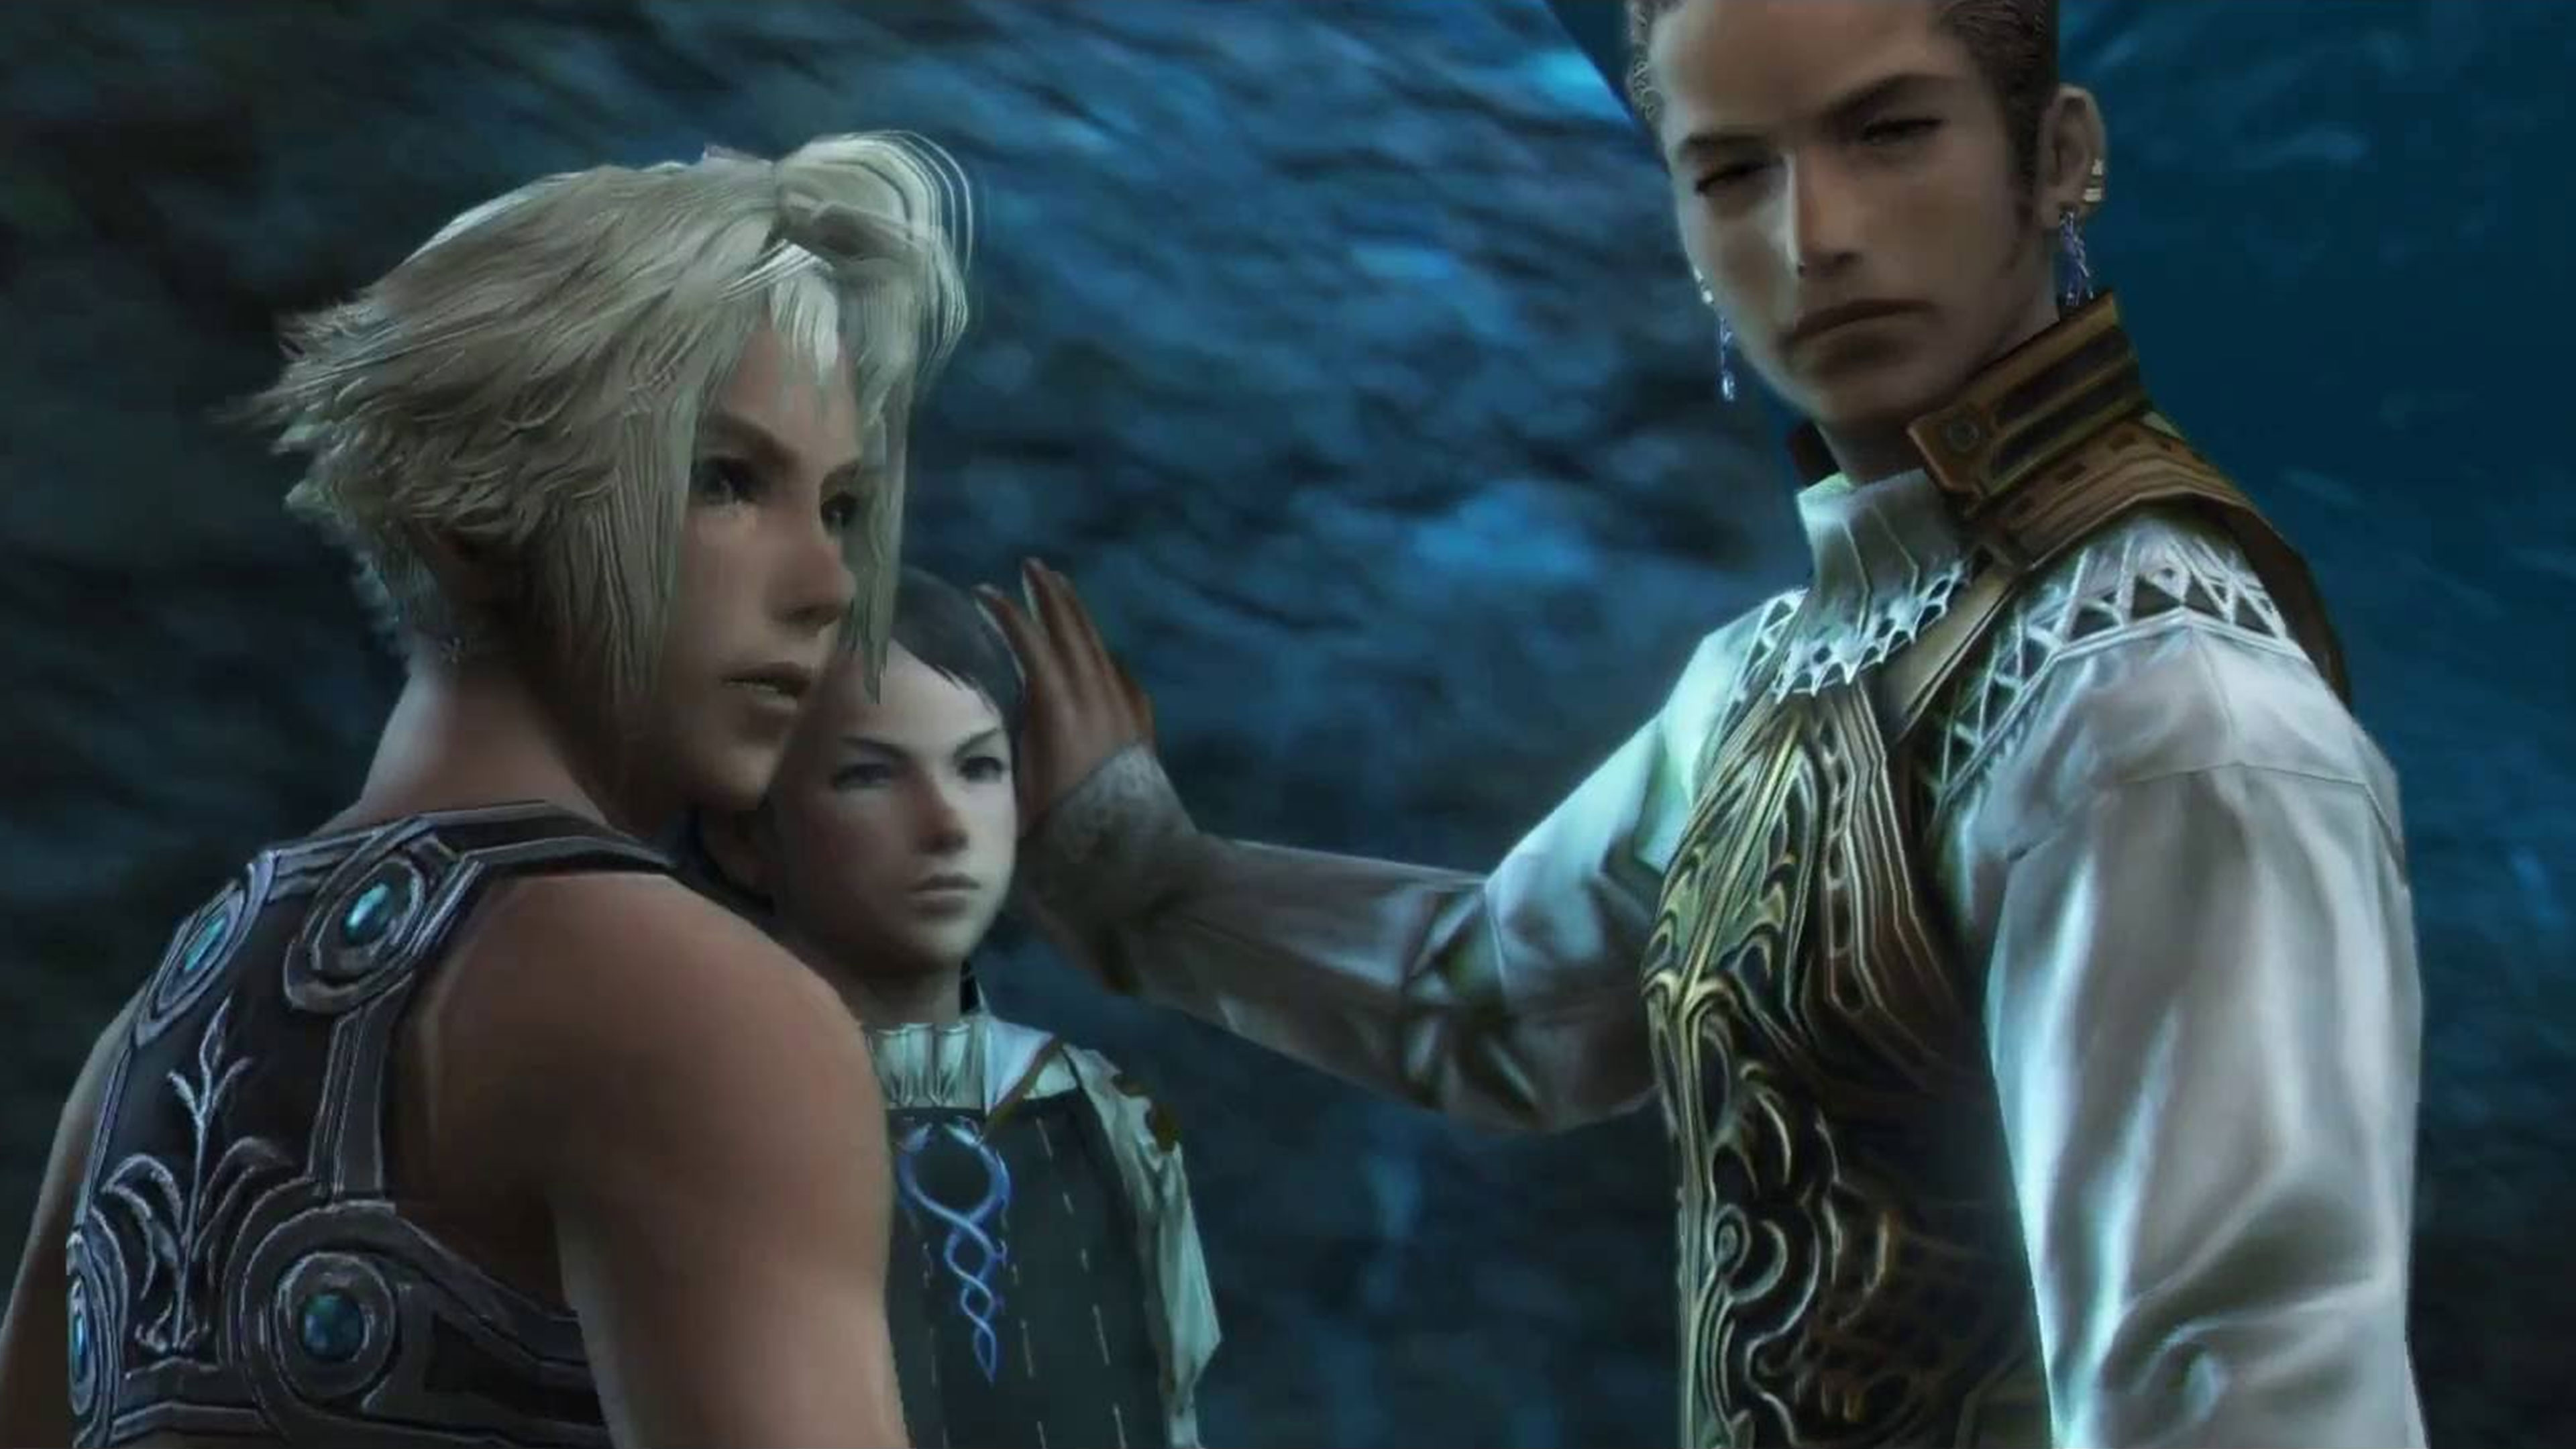 Final Fantasy XII The Zodiac Age Wallpapers in Ultra HD 4K.